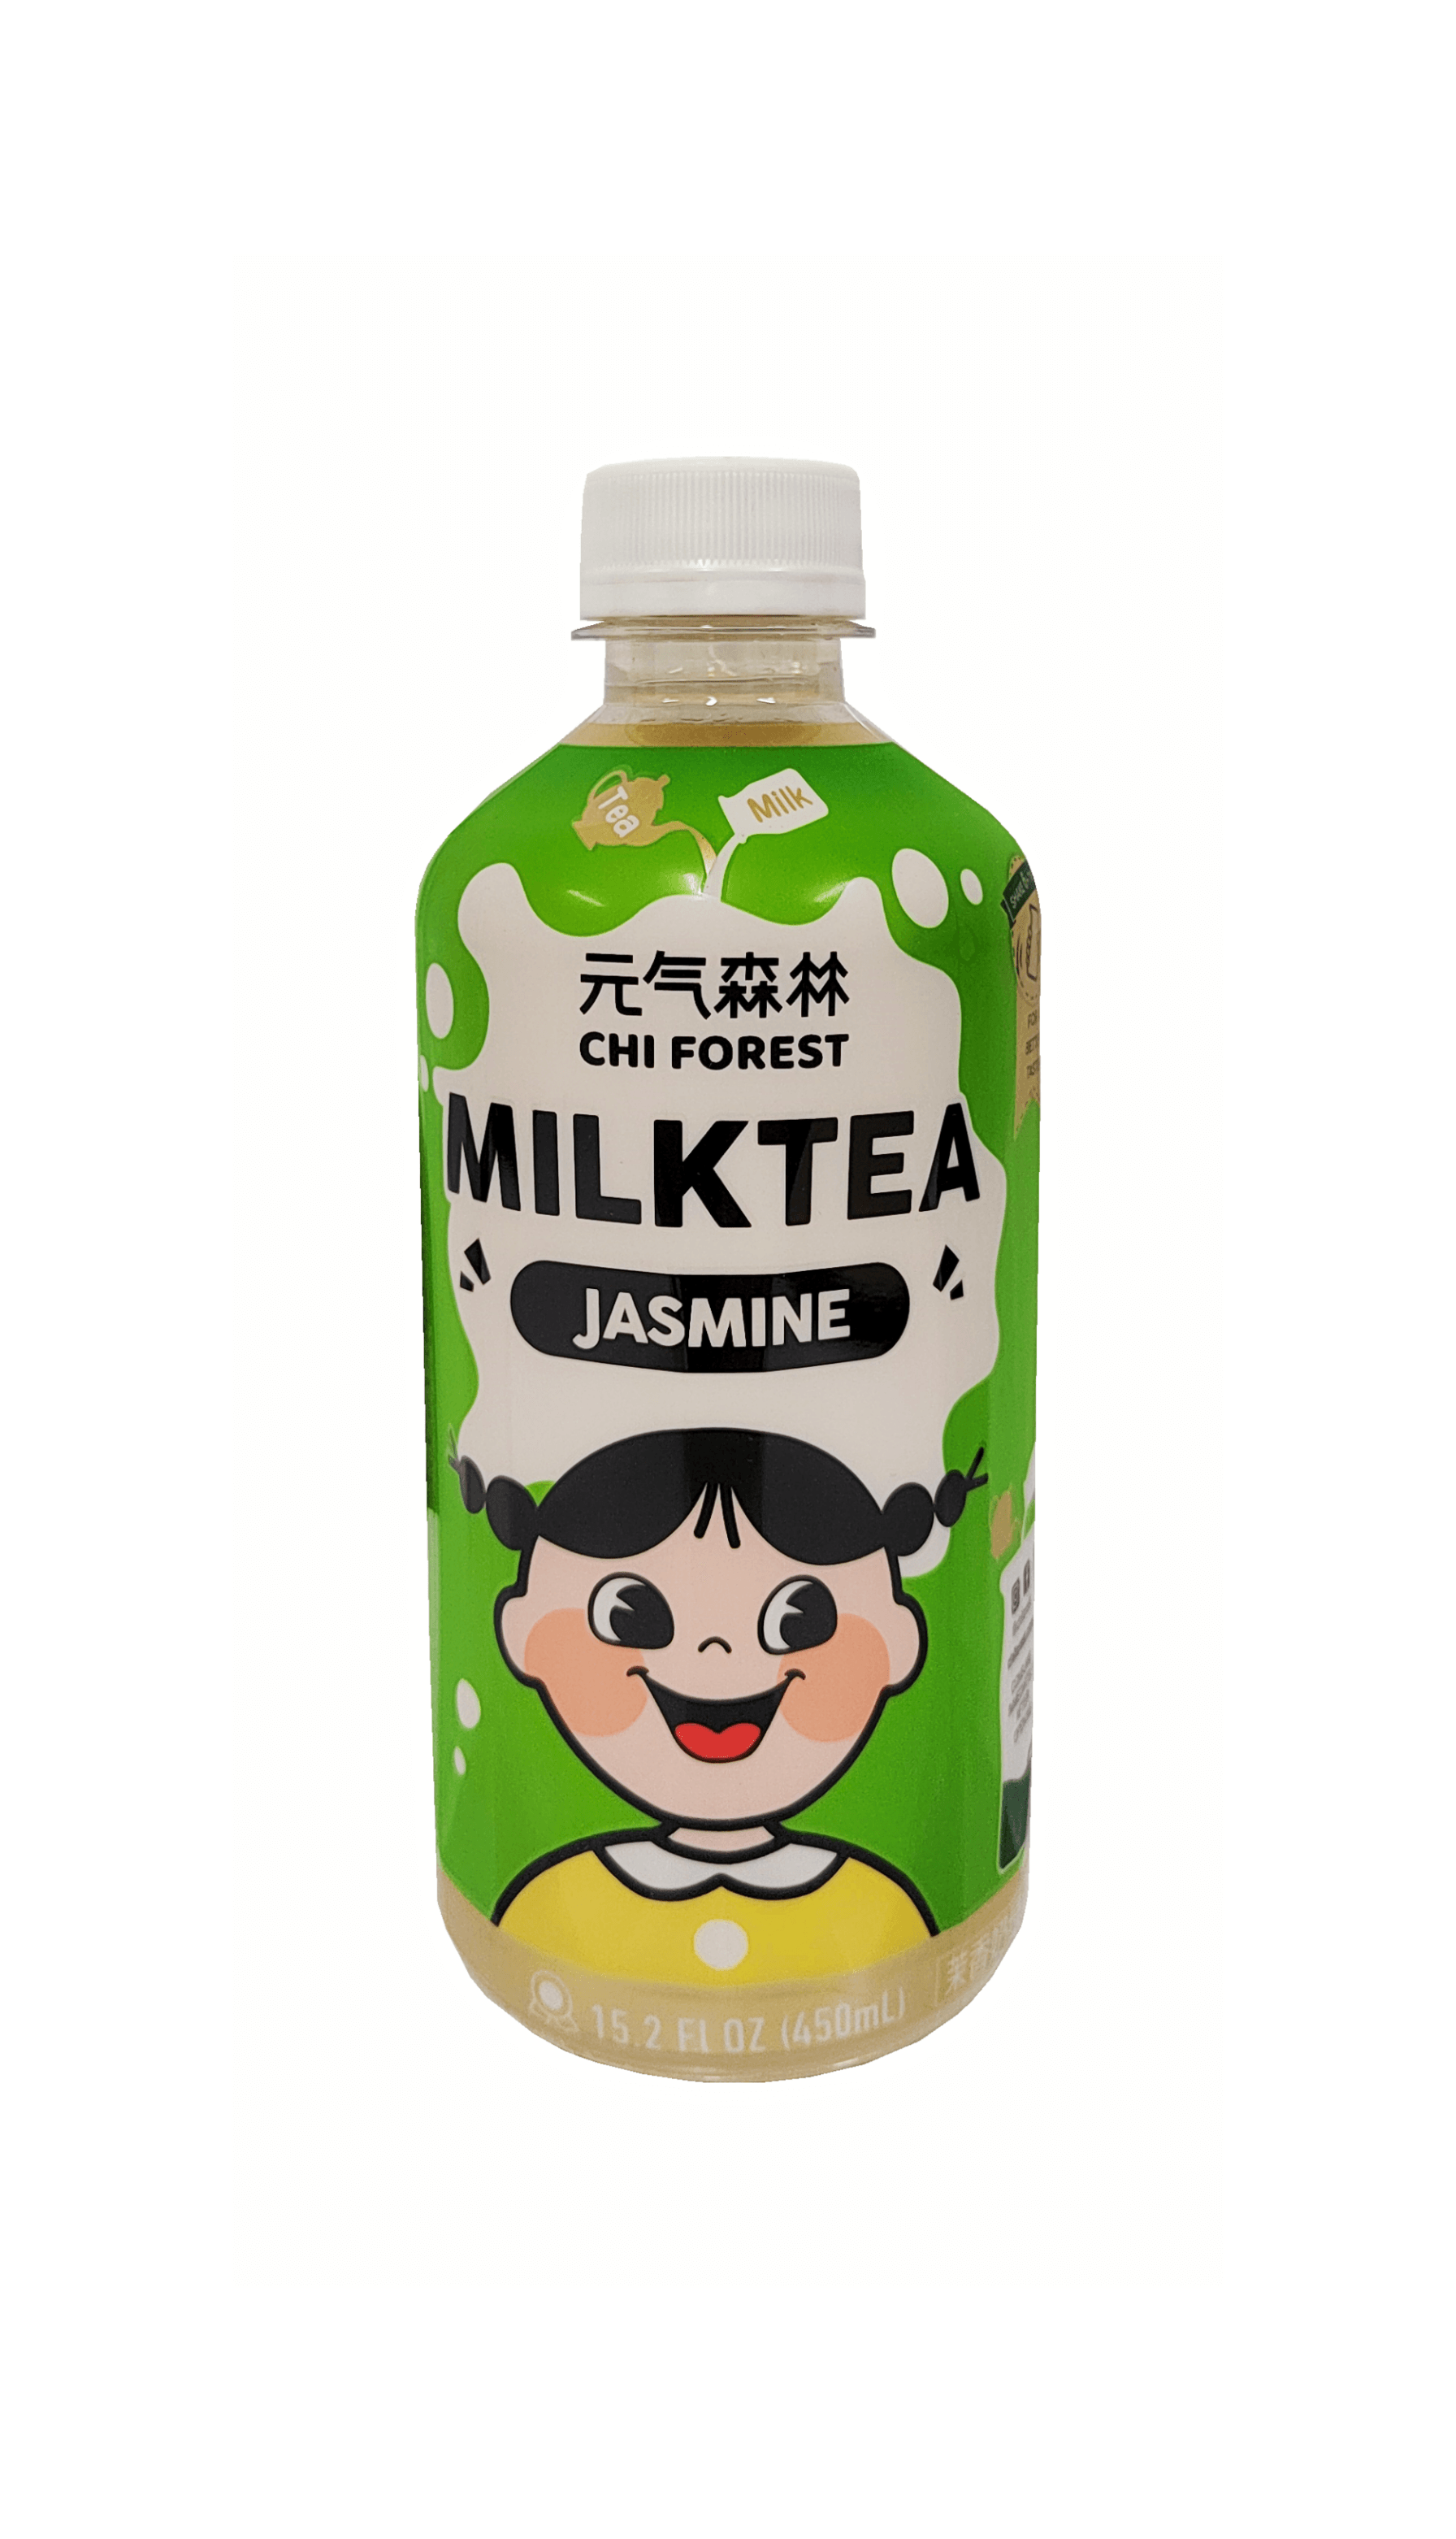 Mjölkte-Jamine/Grönte Smak 450ml Yuan Qi Sen Lin Kina